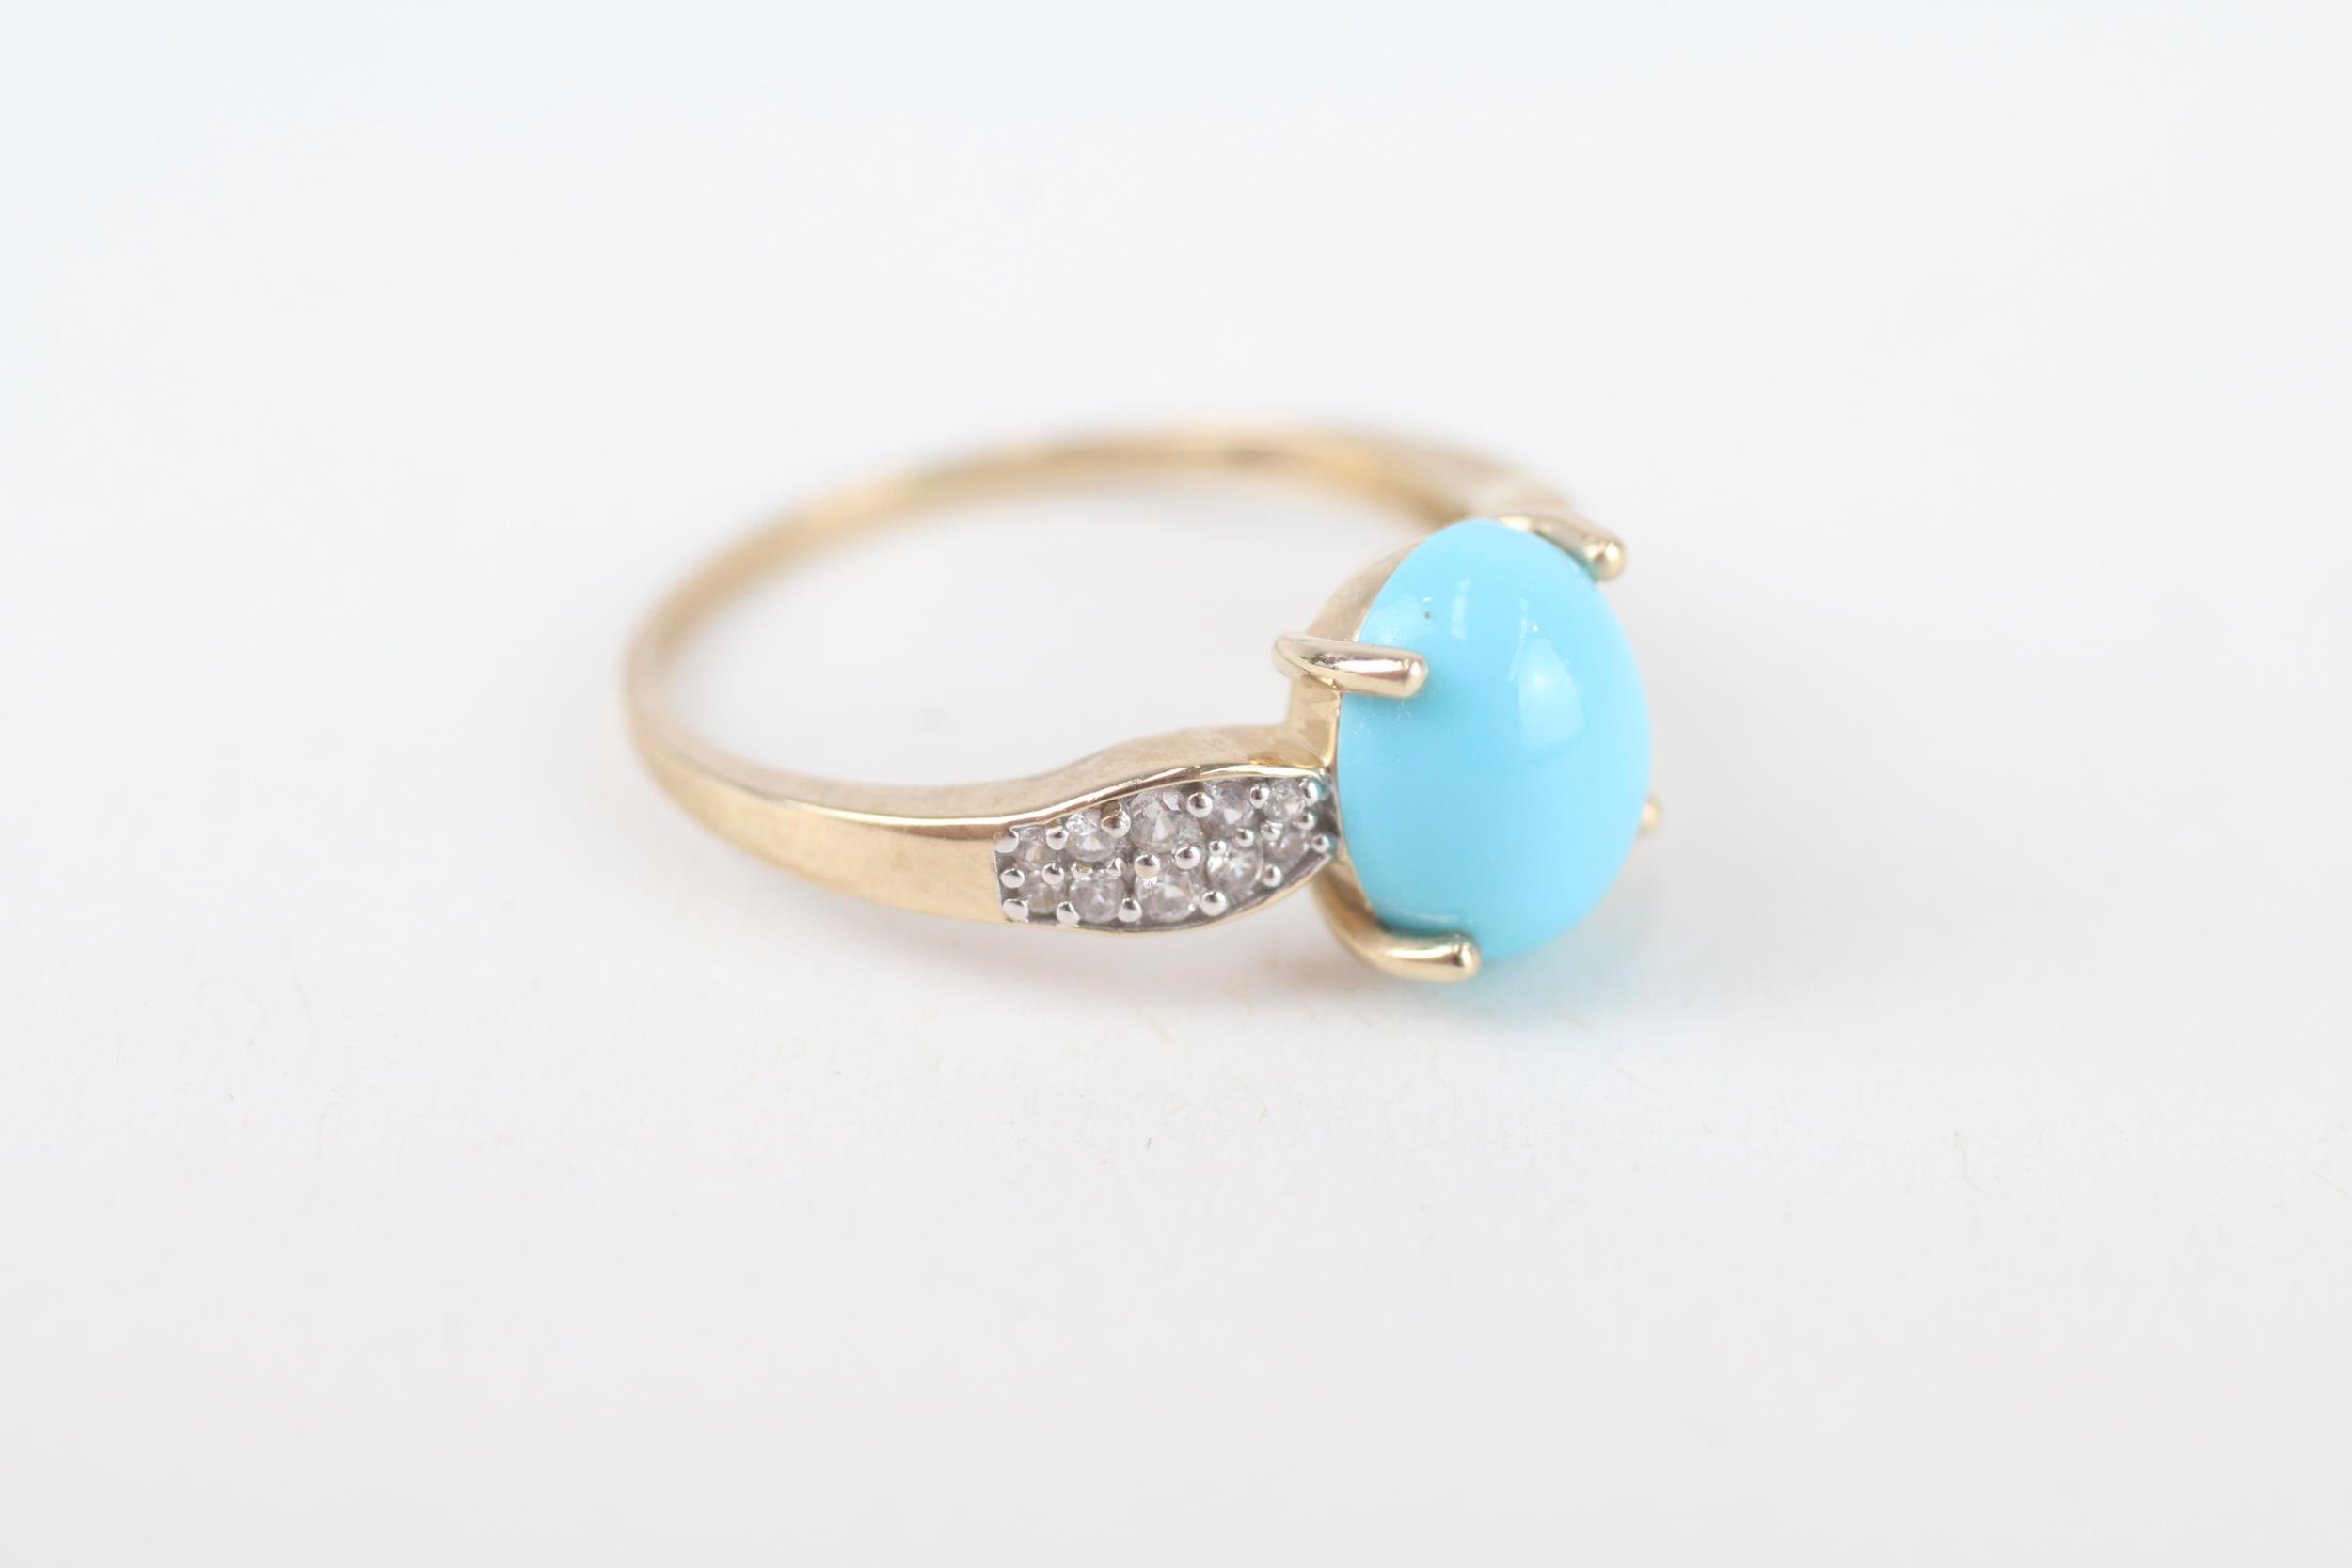 9ct gold blue gemstone single stone ring with white gemstone side Size R 1/2 2.5 g - Image 3 of 5